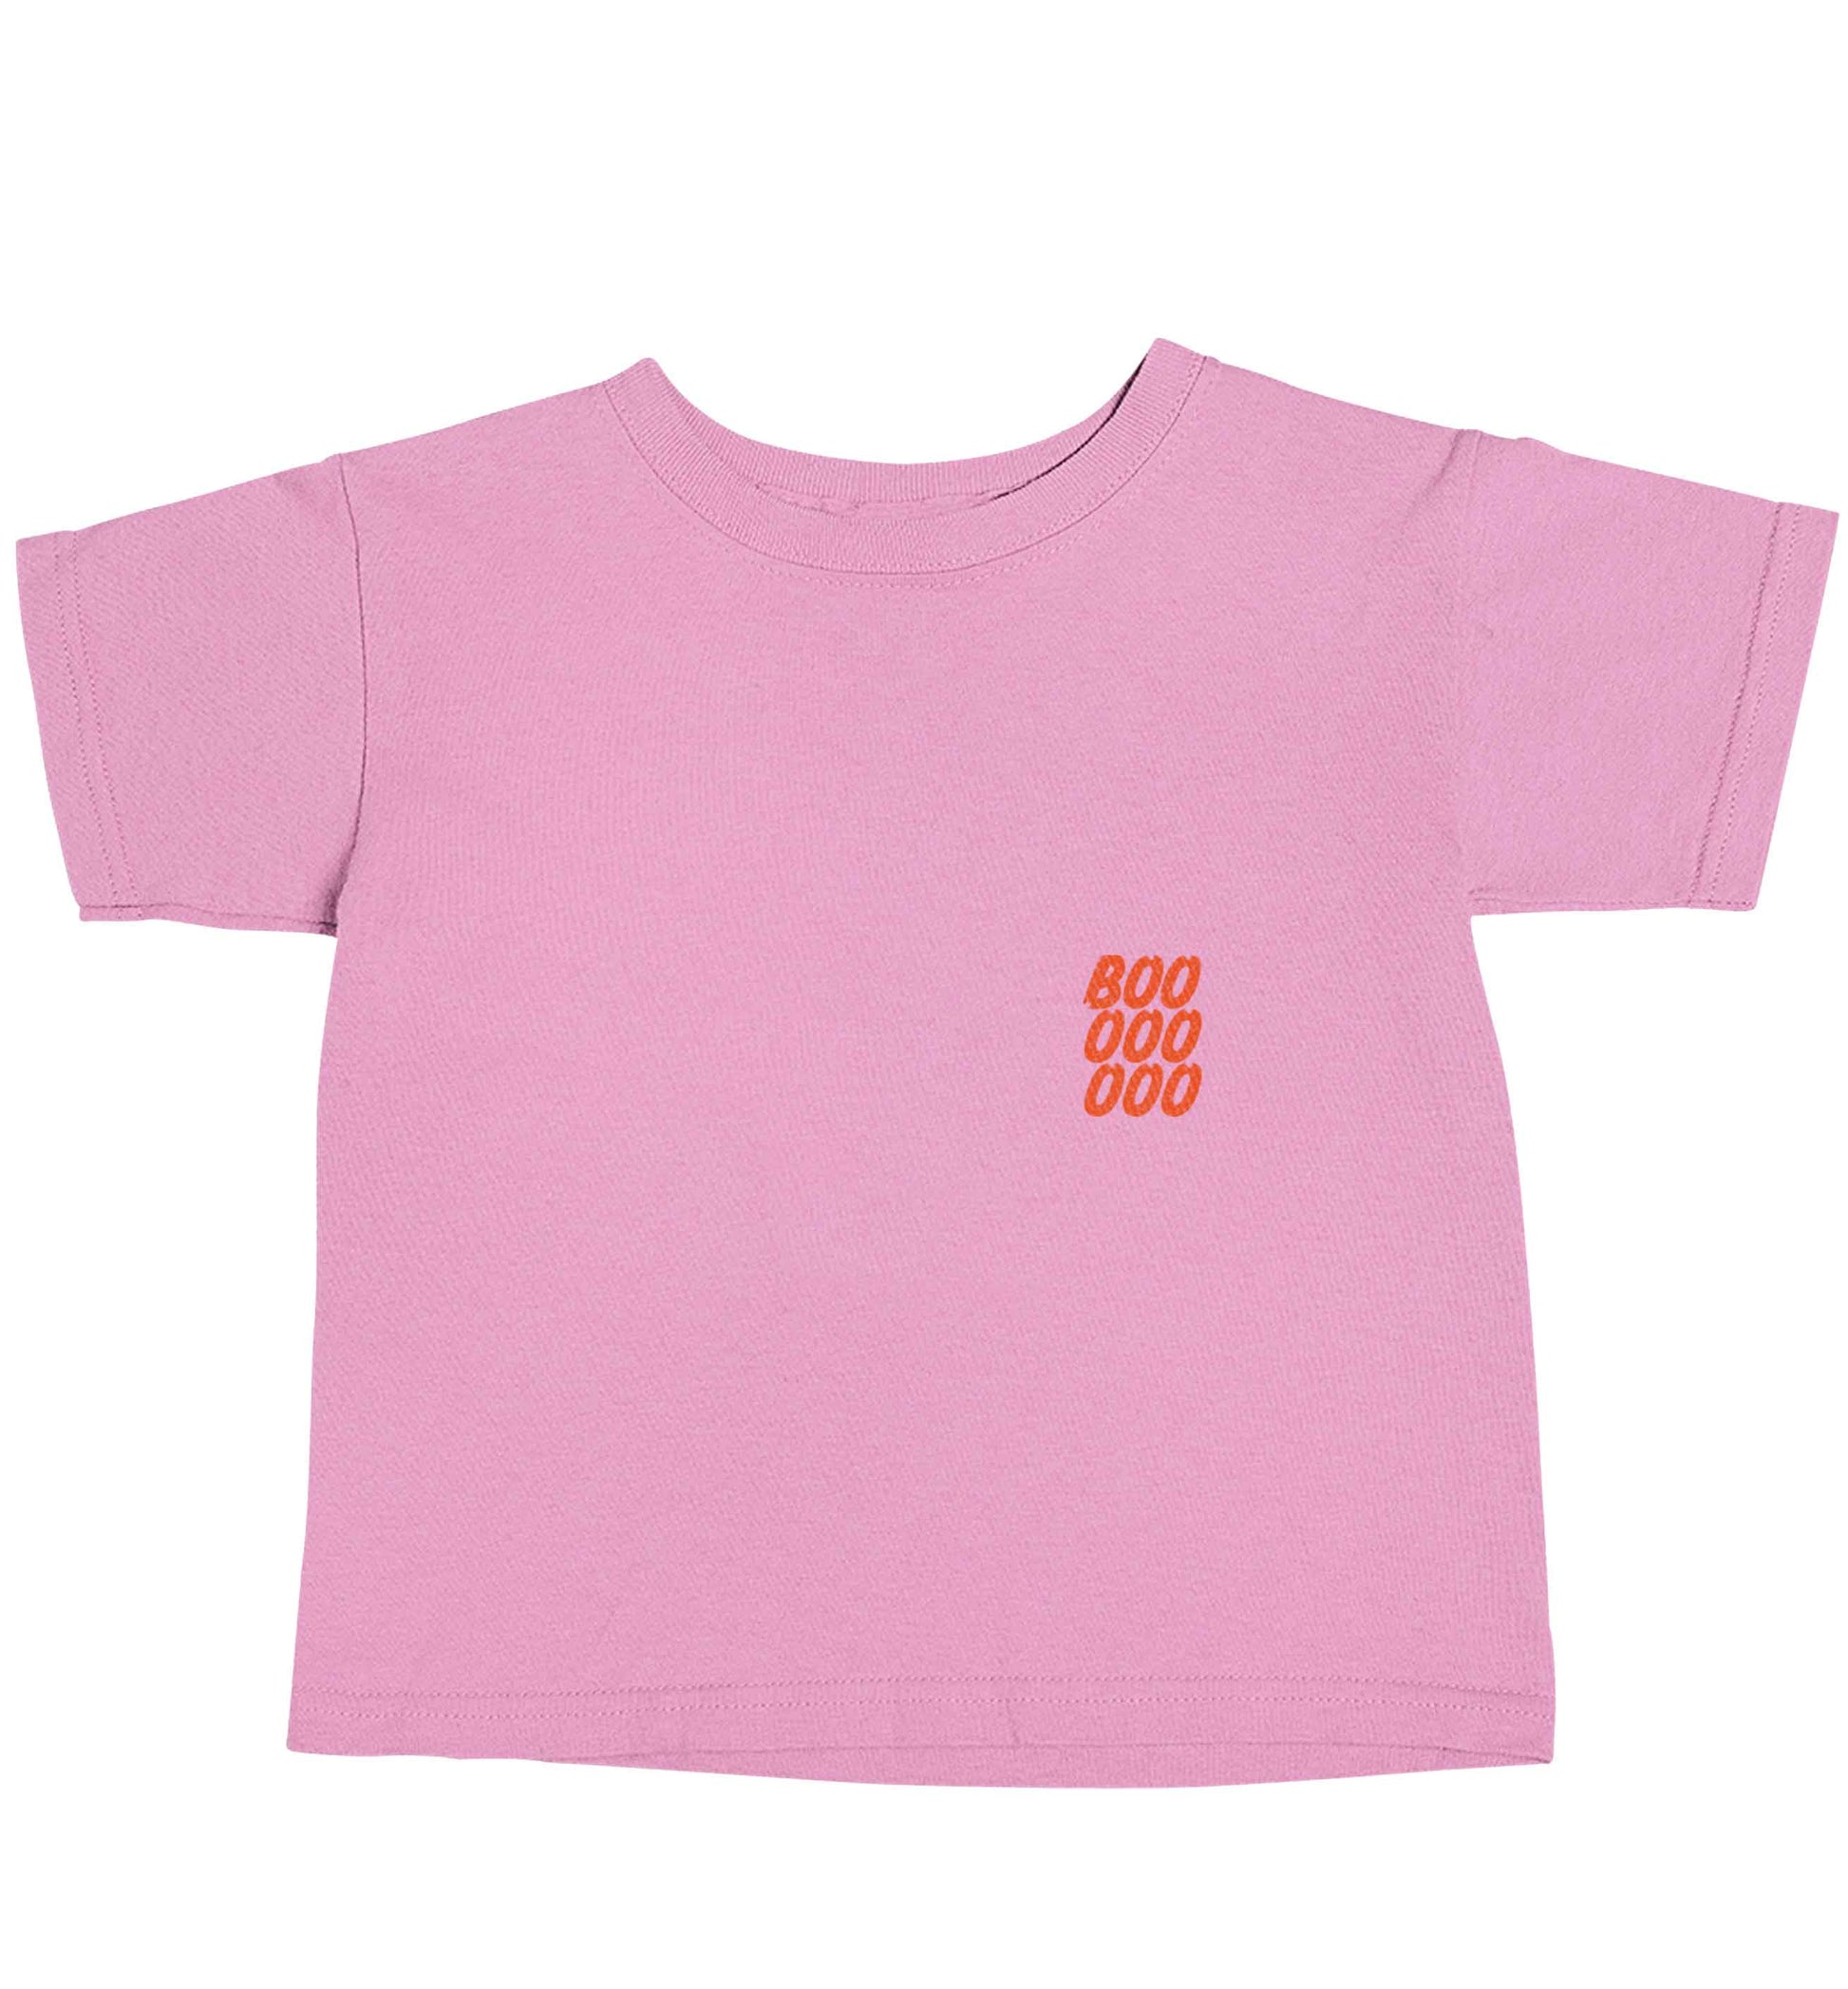 Boo pocket light pink baby toddler Tshirt 2 Years